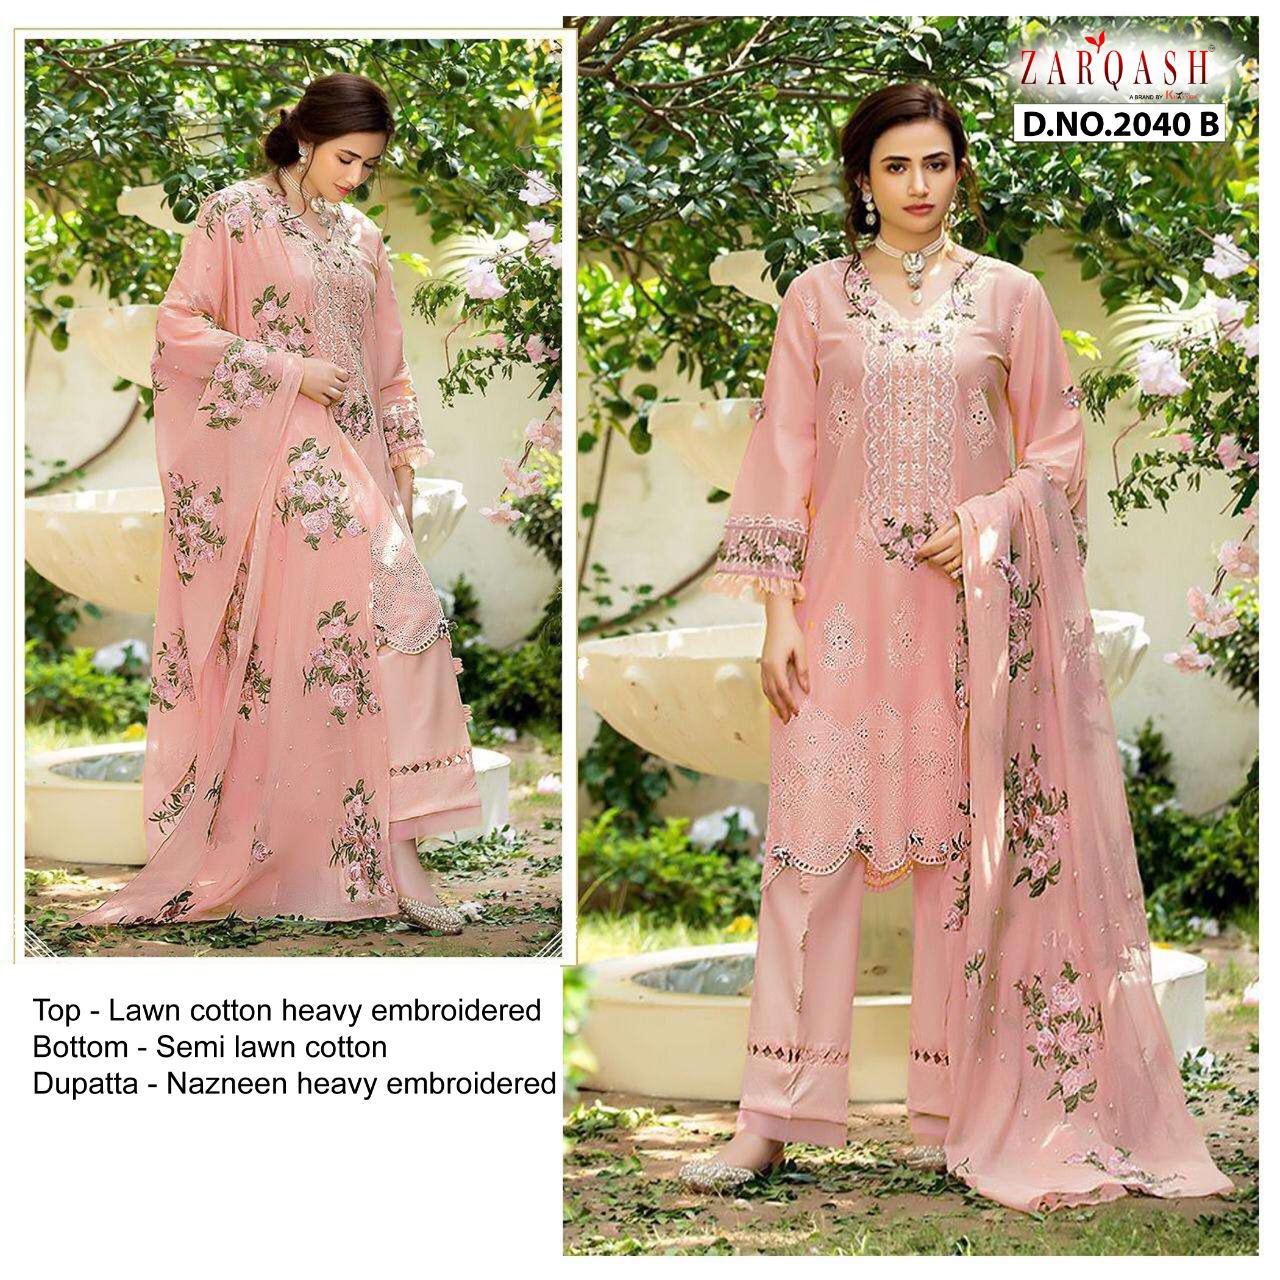 Zarqash Adan Rose Designer Cotton Pakistani  Catalog